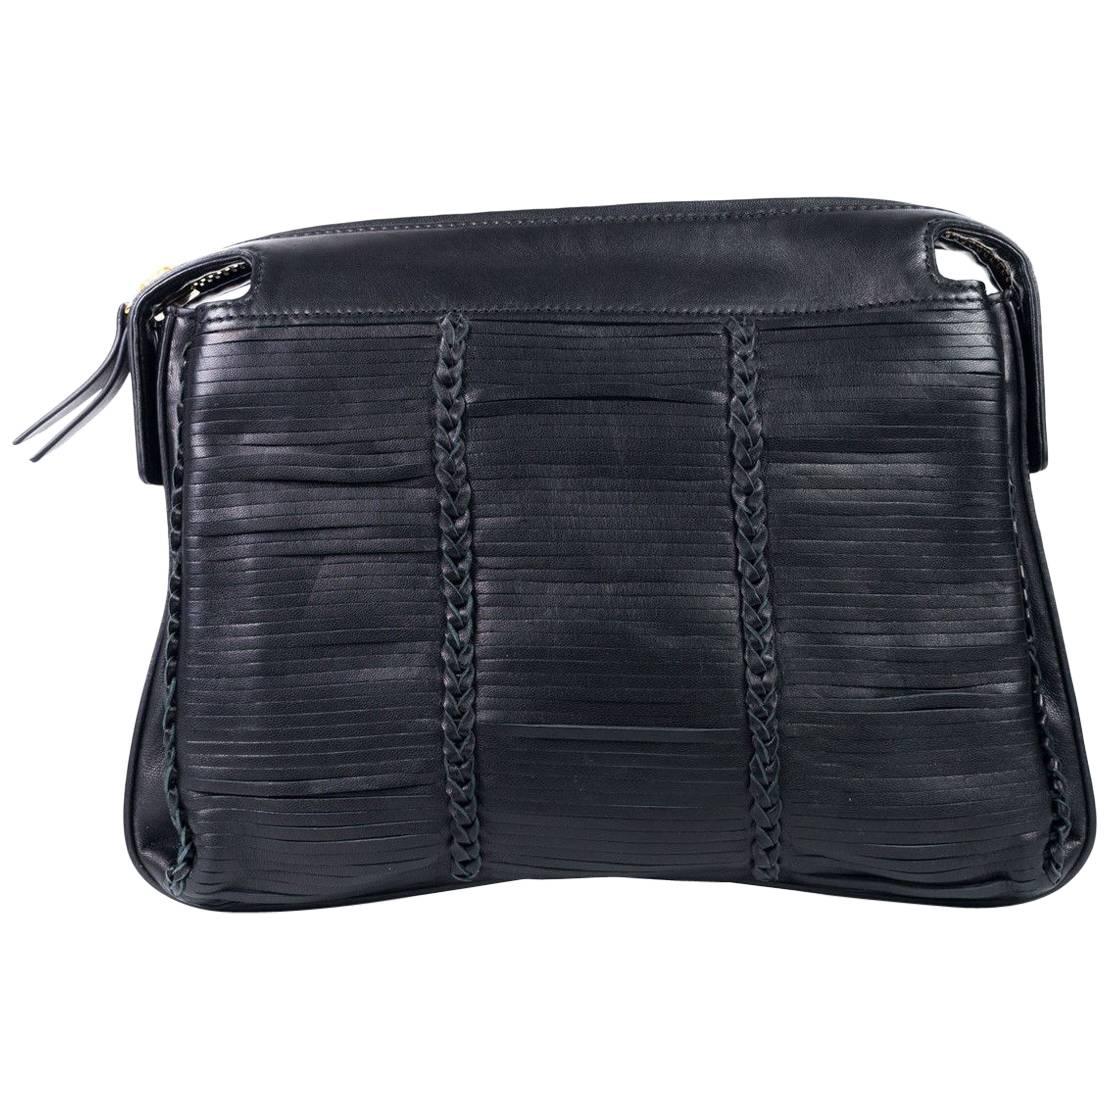 Roberto Cavalli Women's Black Leather Woven Shoulder Bag For Sale